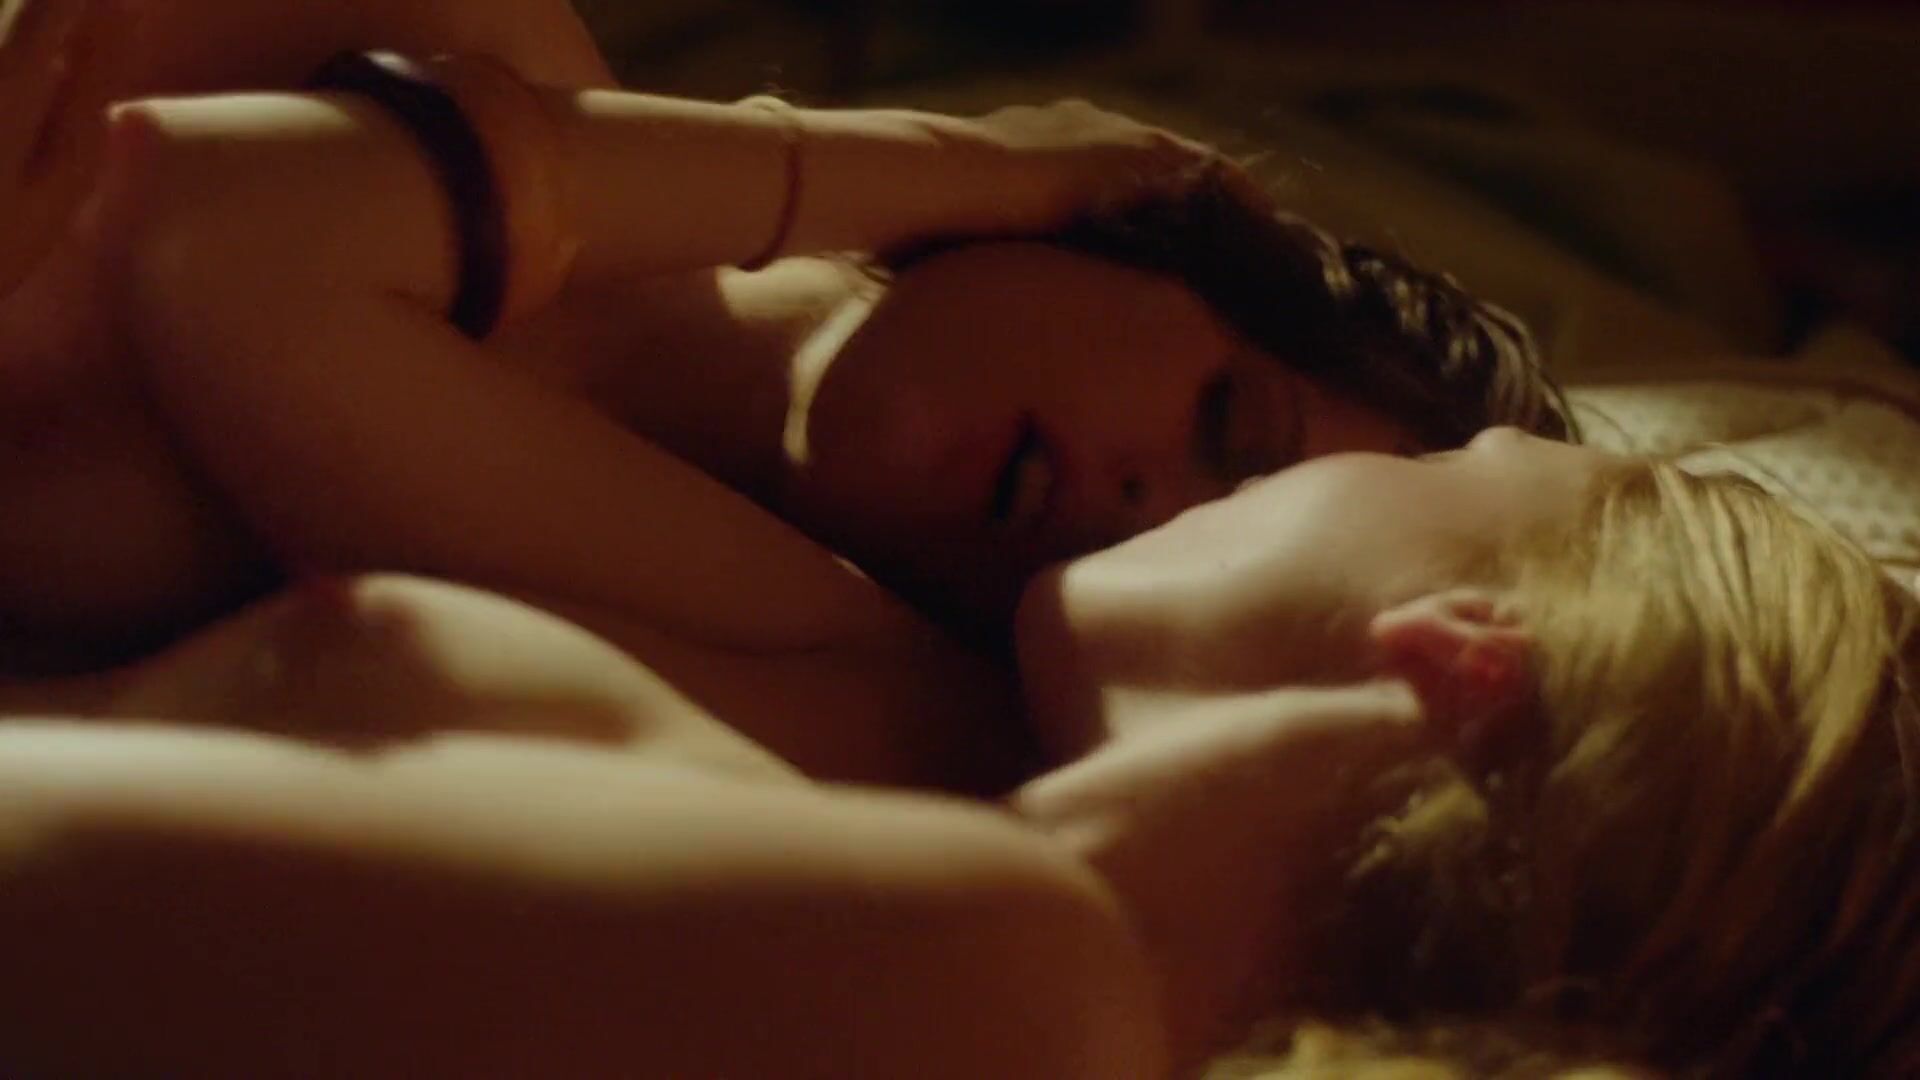 Ducha Hot same-sex lovers Asta Paredes nude and Catherine Corcoran nude in lesbian sex scene Scene